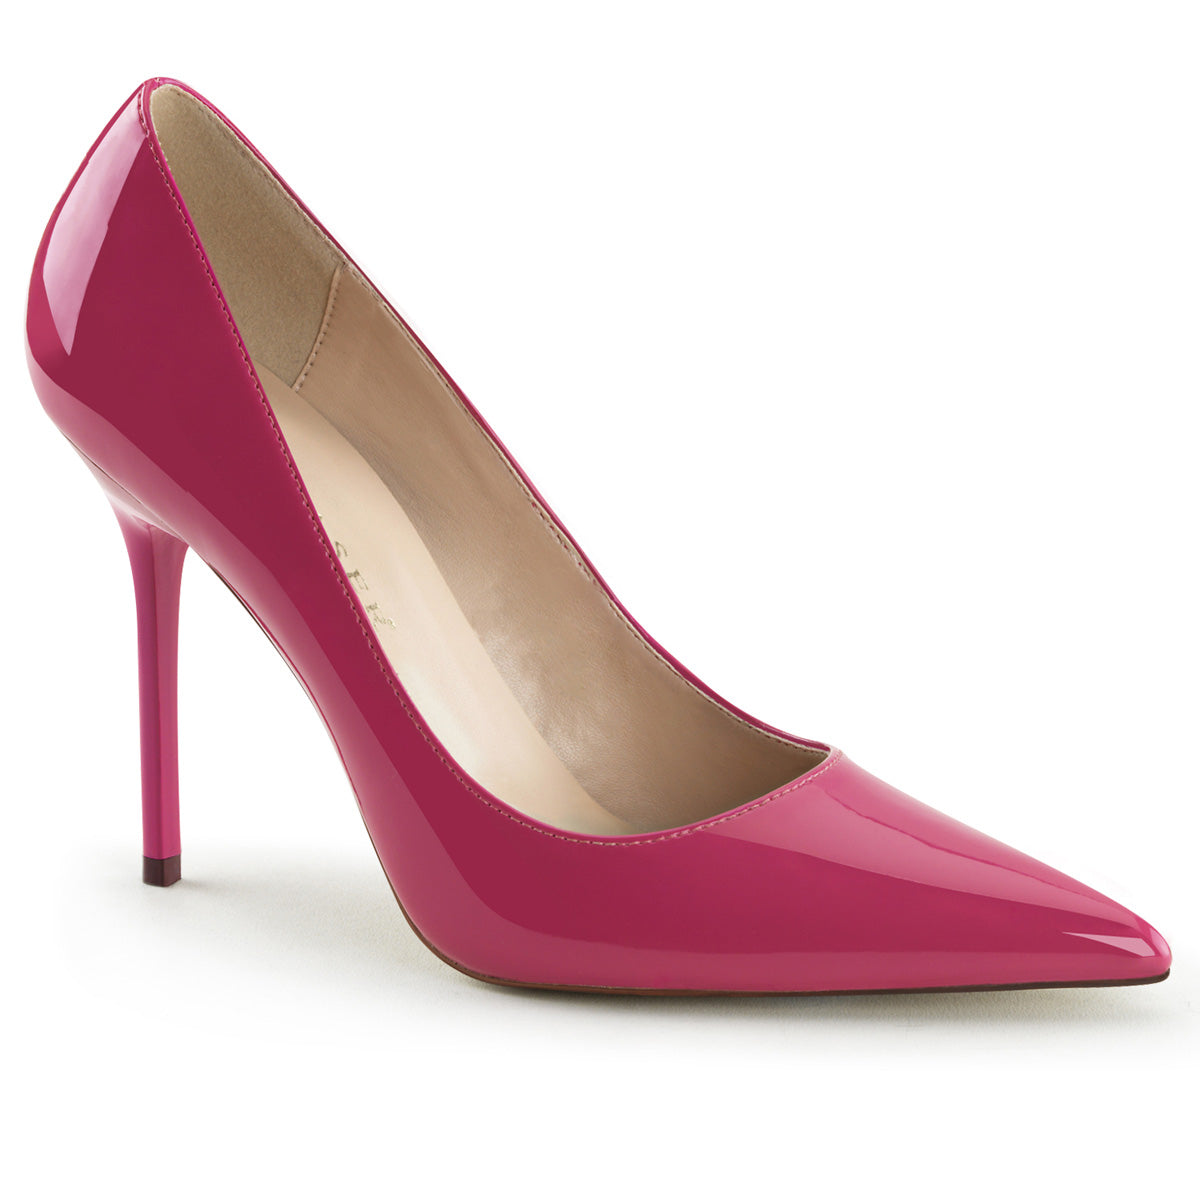 CLASSIQUE-20 Pleasers 4" Heel Hot Pink Patent Fetish Footwear